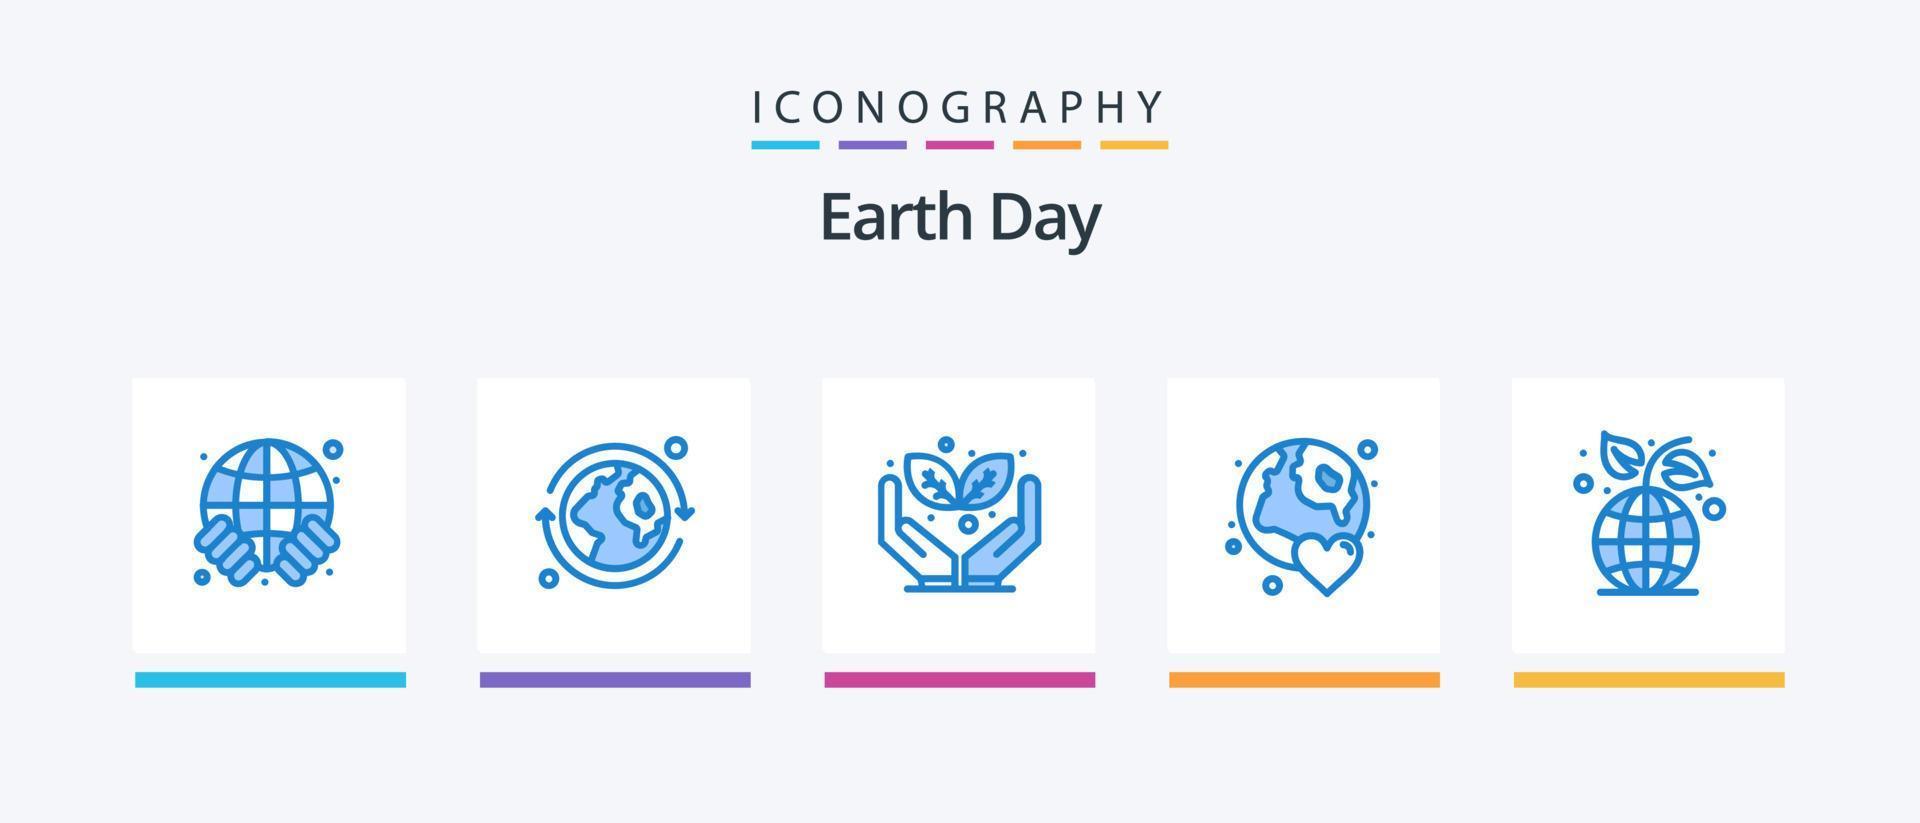 Erde Tag Blau 5 Symbol Pack einschließlich Umfeld. Erde Tag. schützen. Tag. Welt. kreativ Symbole Design vektor